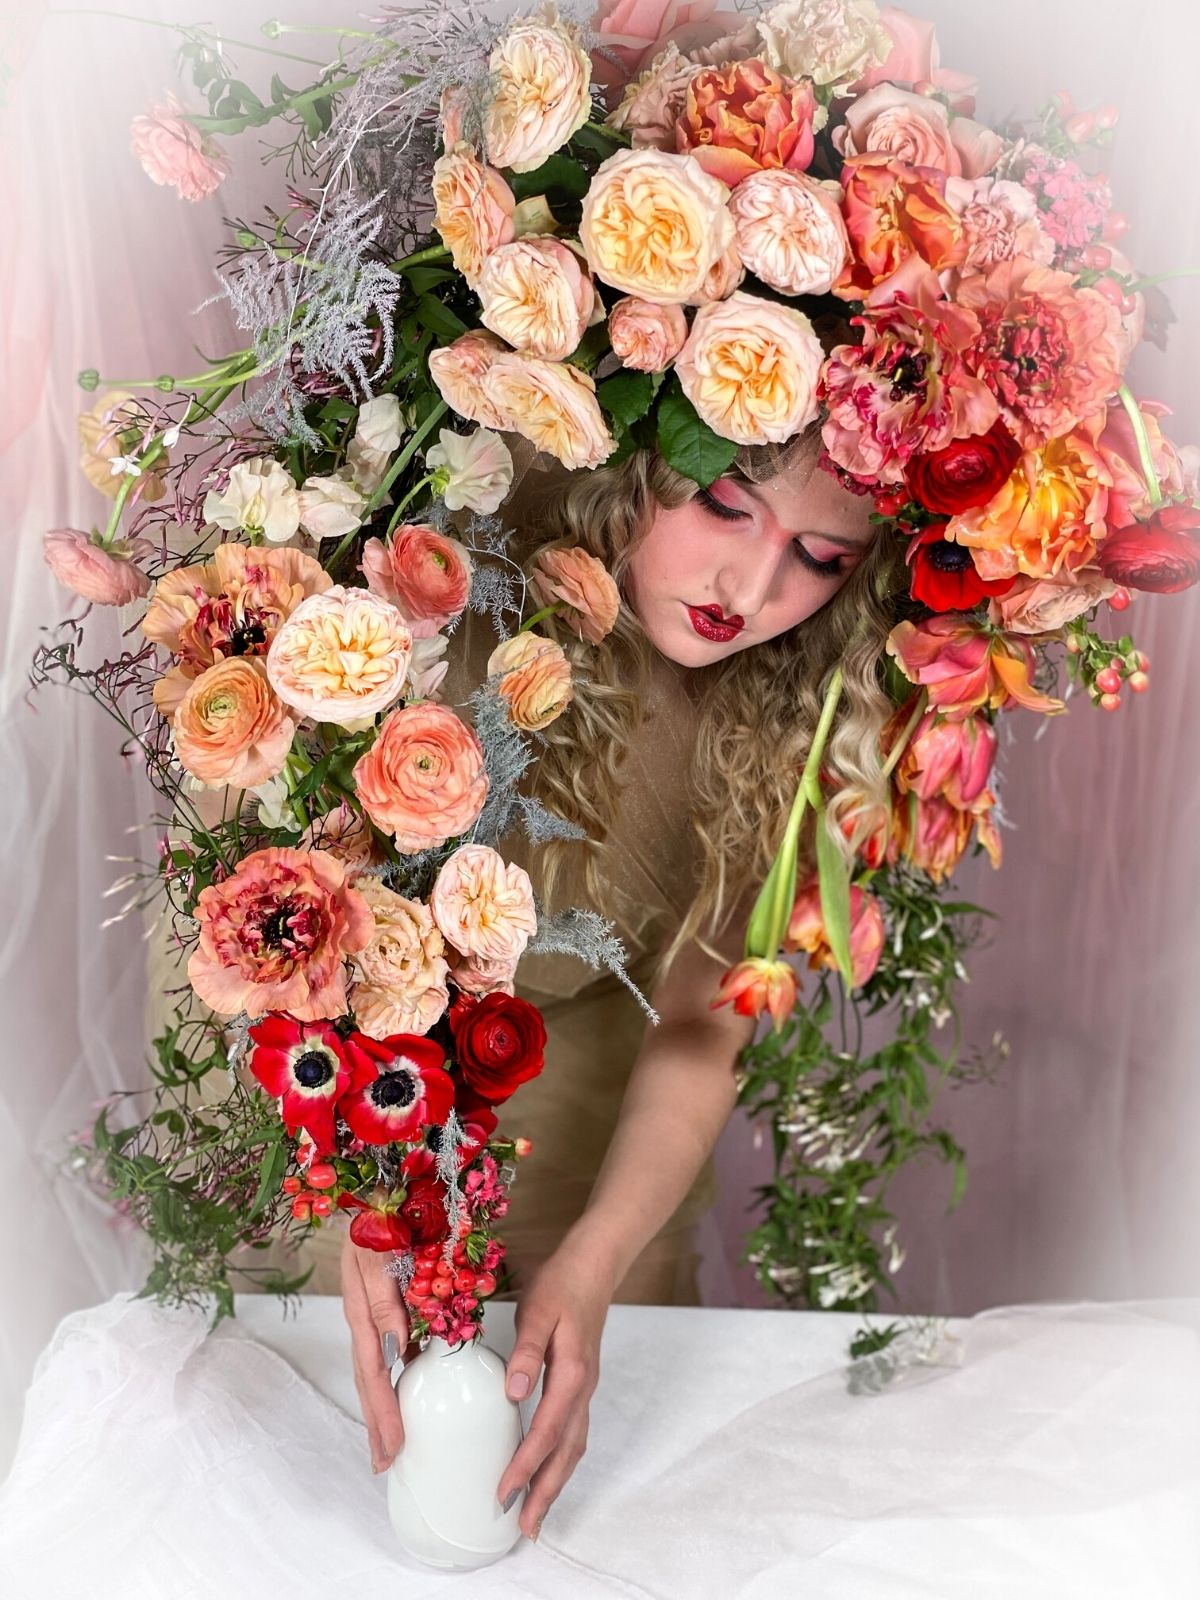 I Am Flower - I Am Woman - Beth O'Reilly - On Thursd